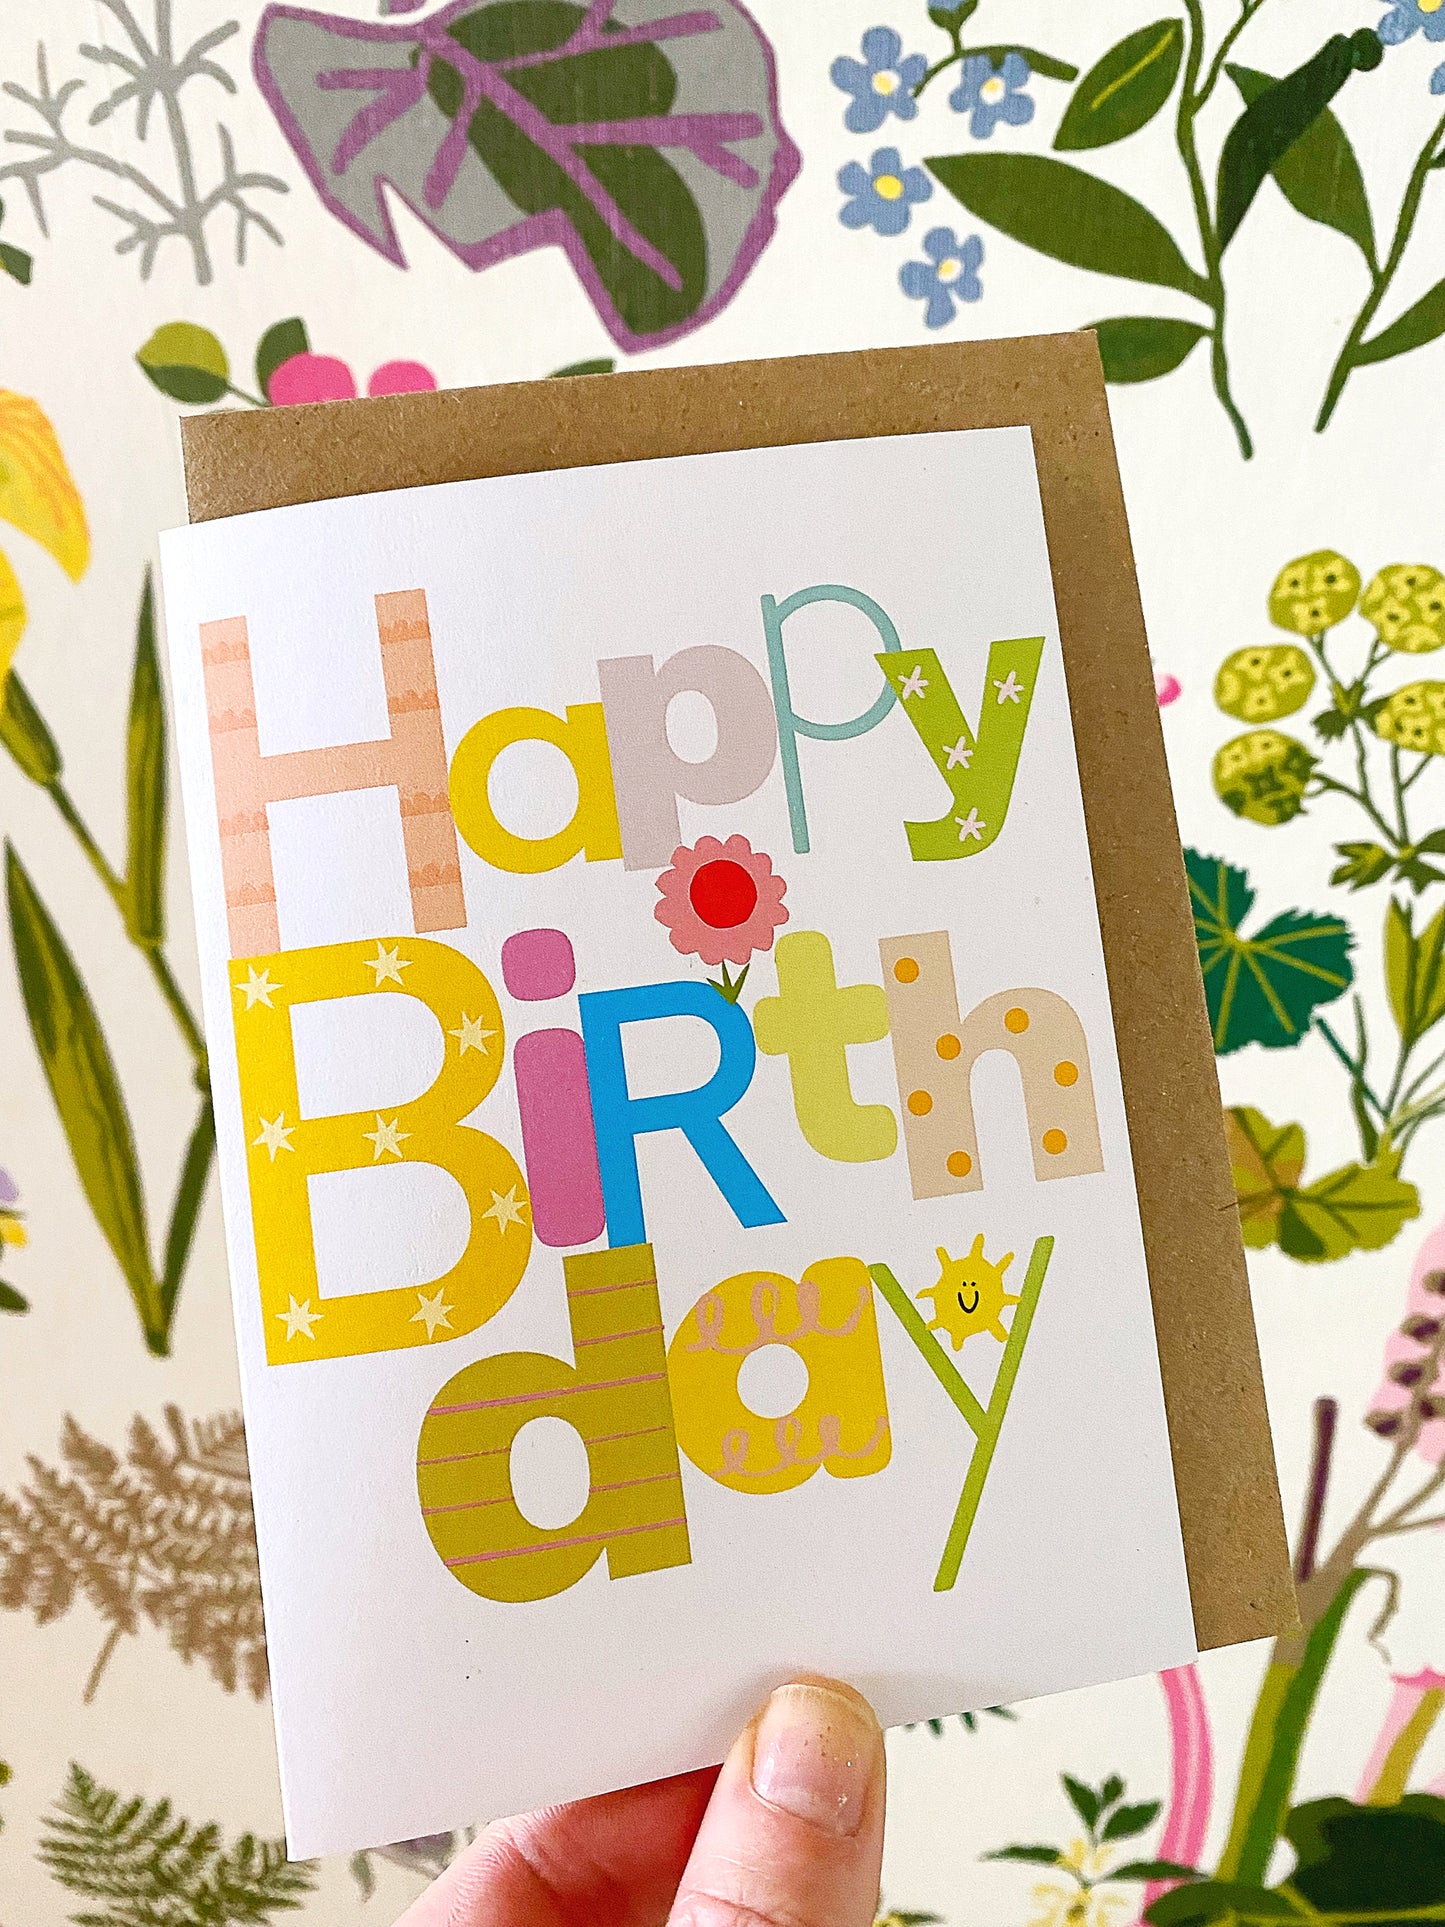 Happy Birthday type greeting card